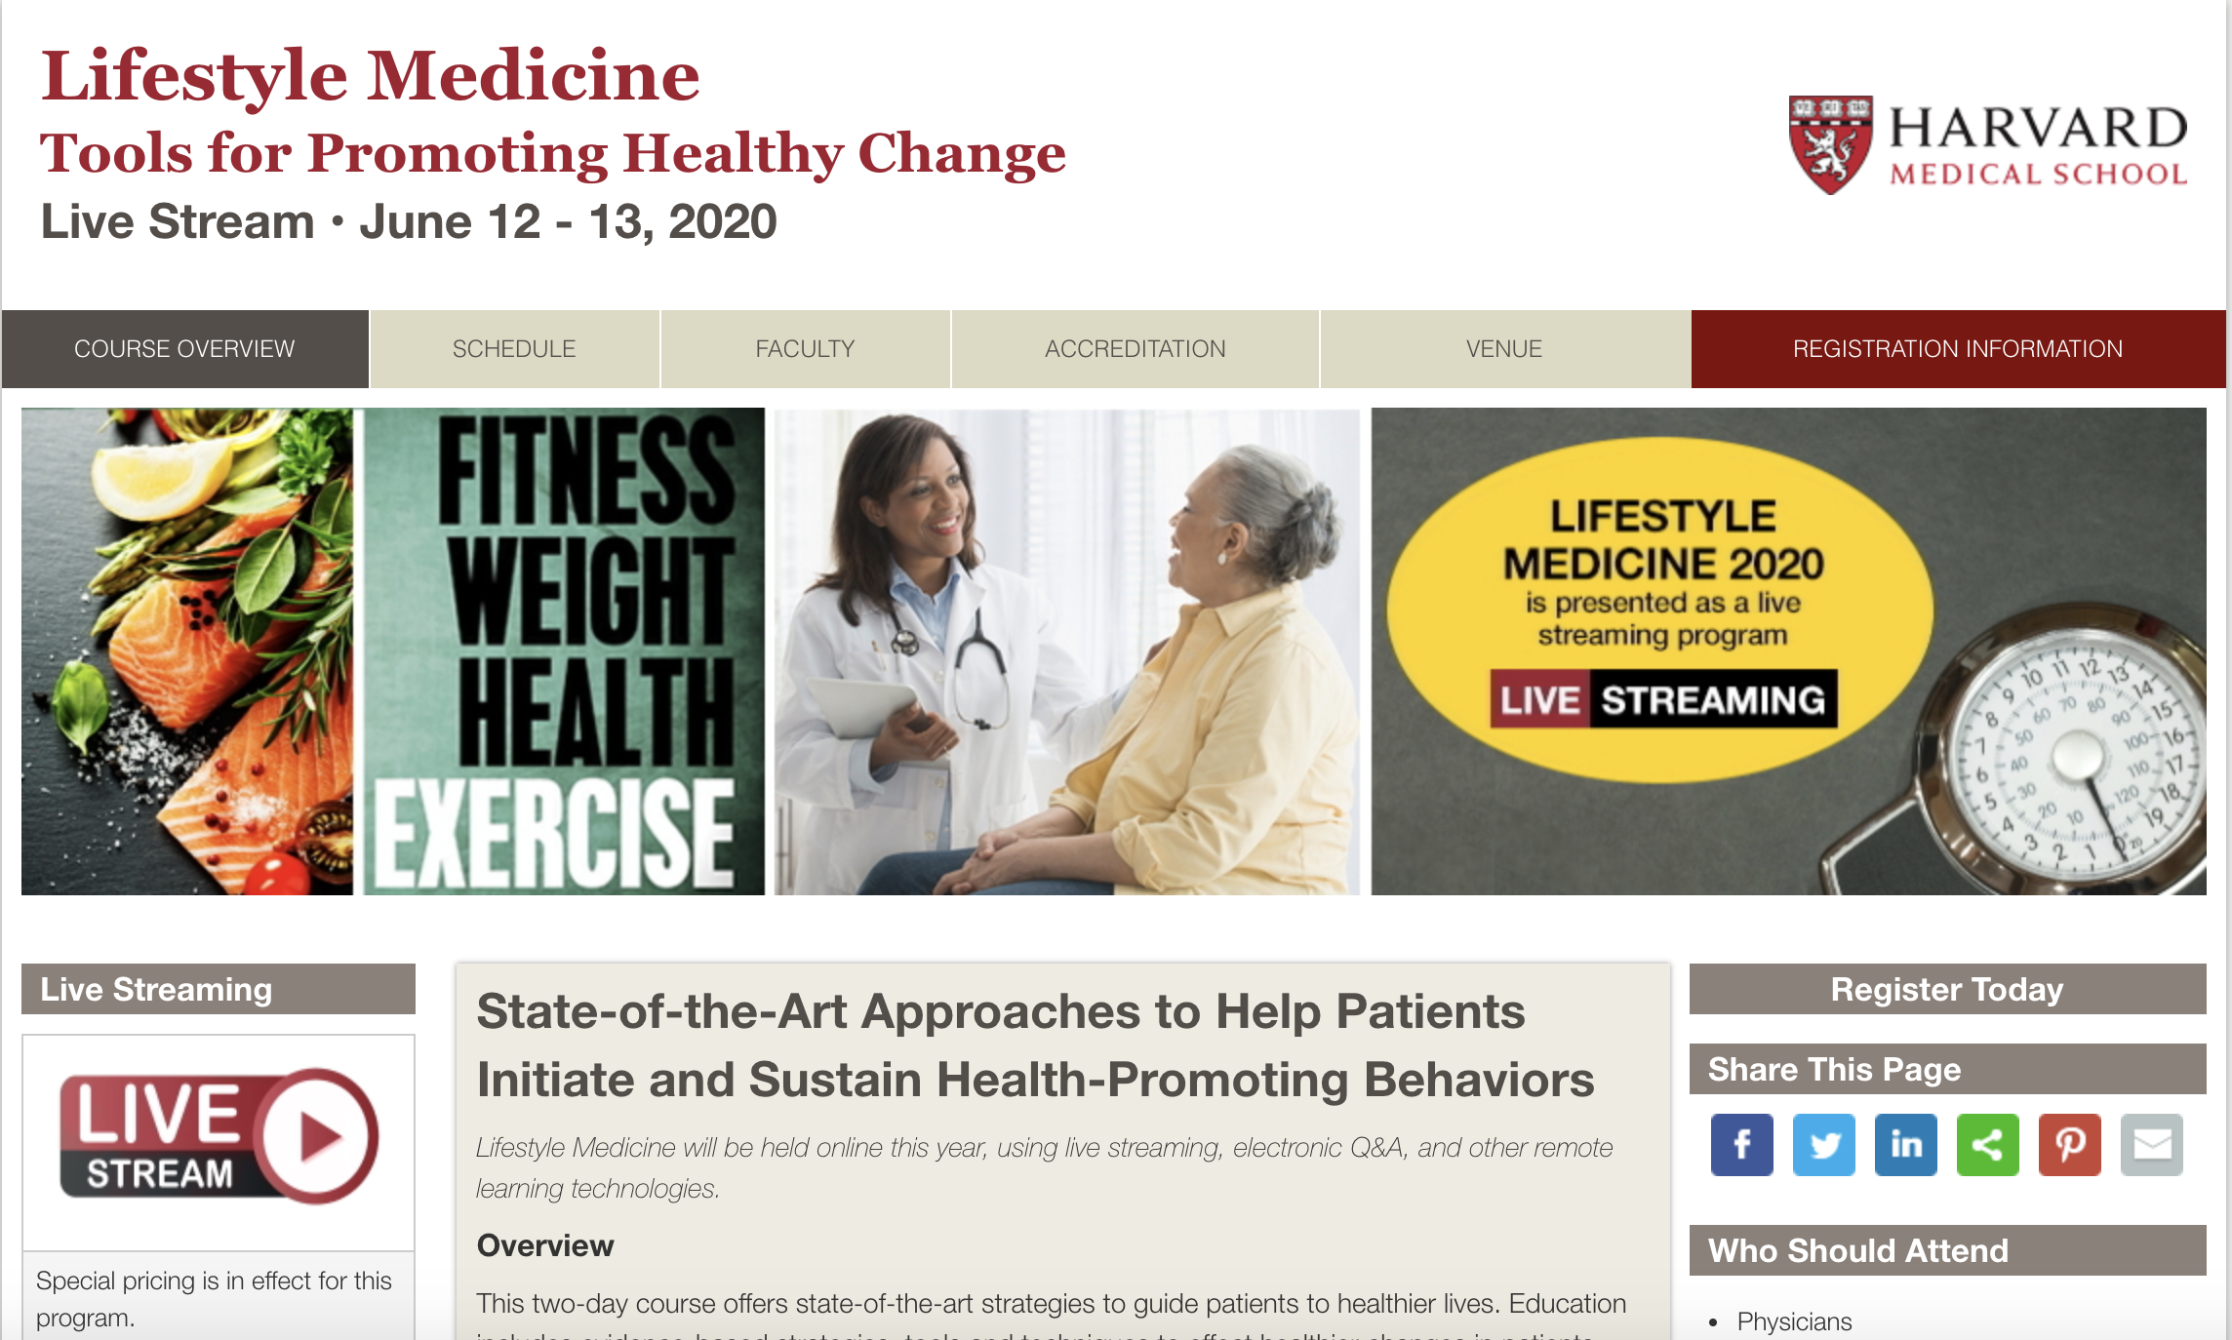 Screenshot of Harvard University's "Lifestyle Medicine" symposium website page.